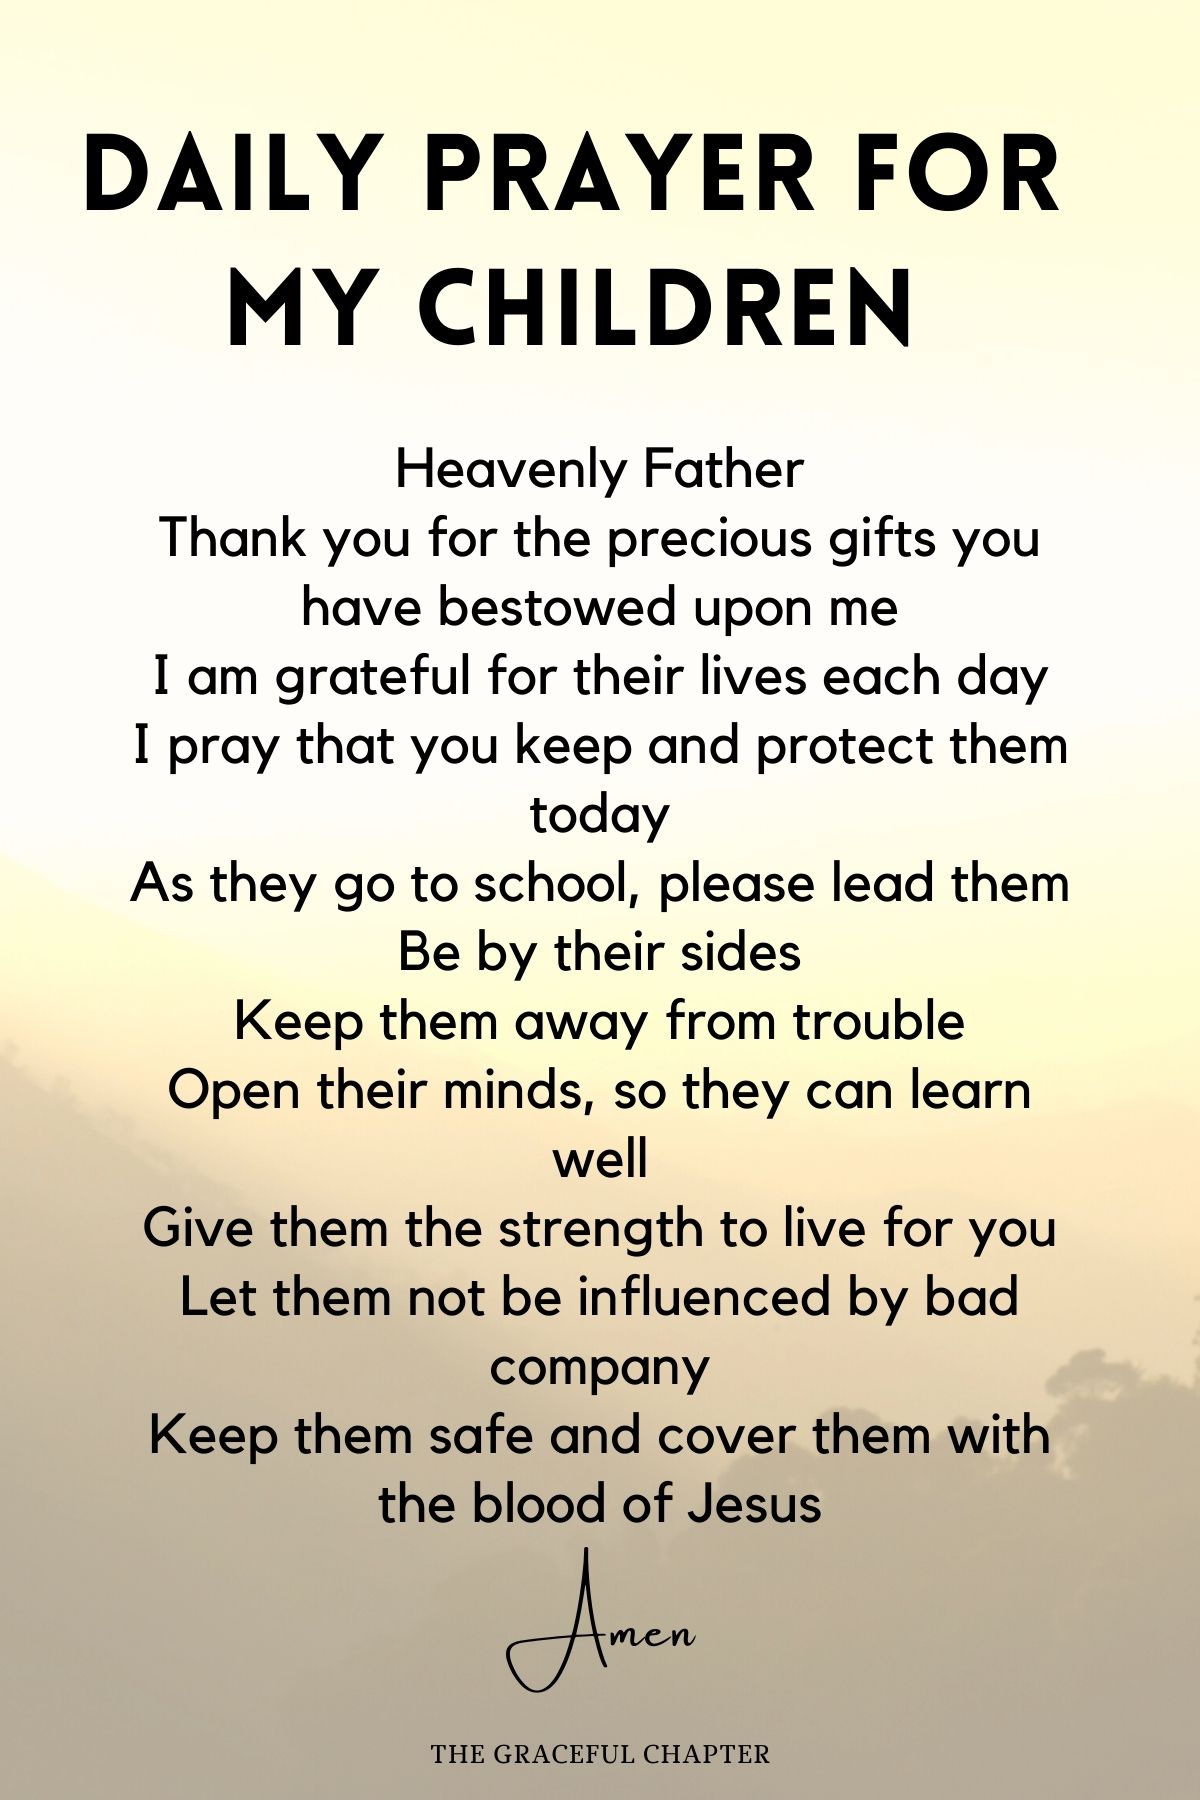 Daily Prayer for my children